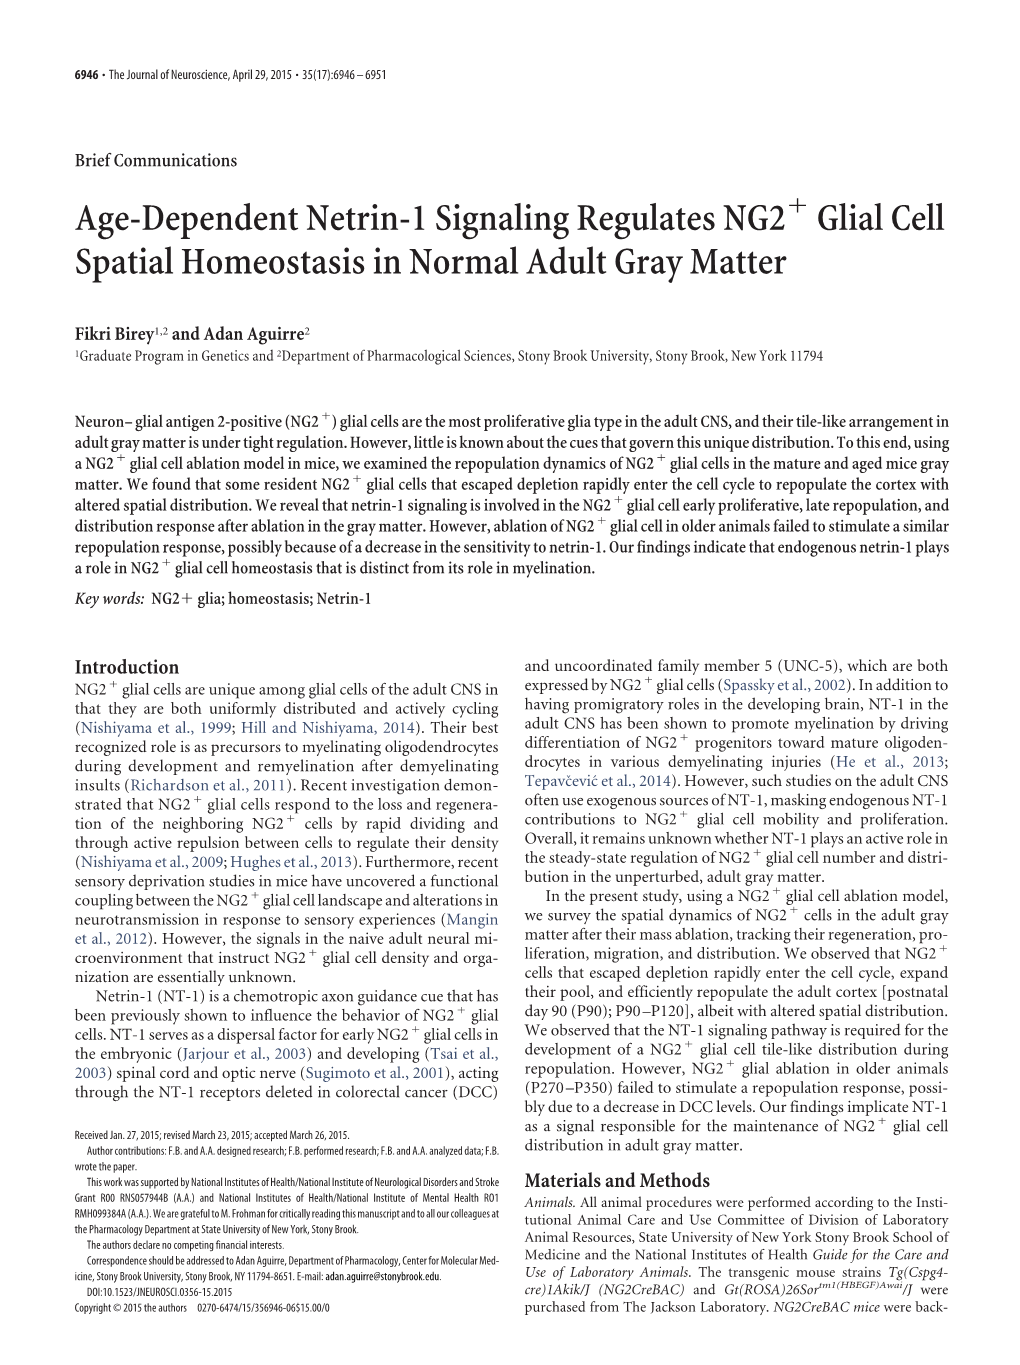 Age-Dependent Netrin-1 Signaling Regulates NG2 Glial Cell Spatial